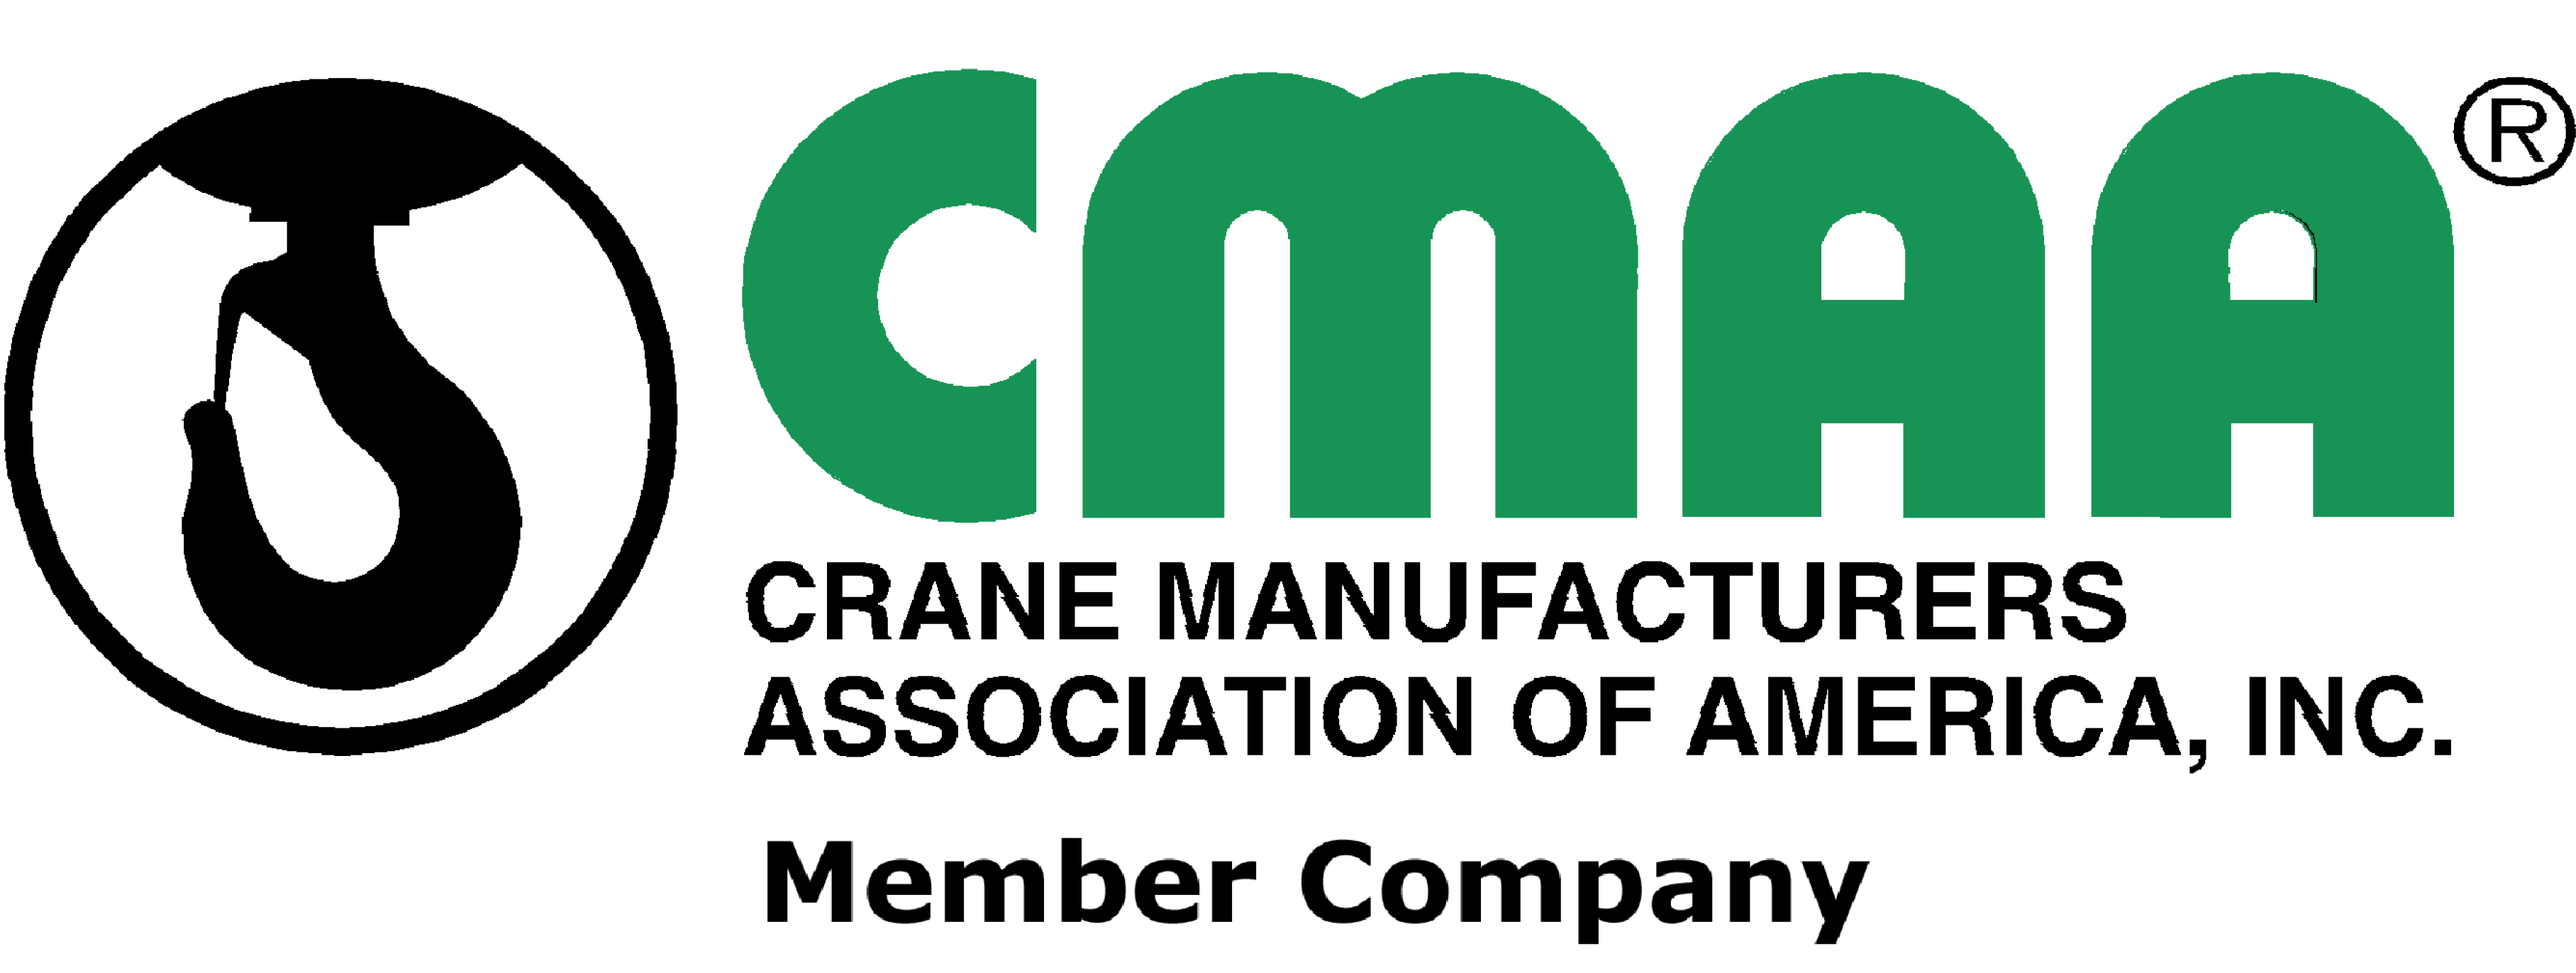 Crame Manufacturers Association of America Logo